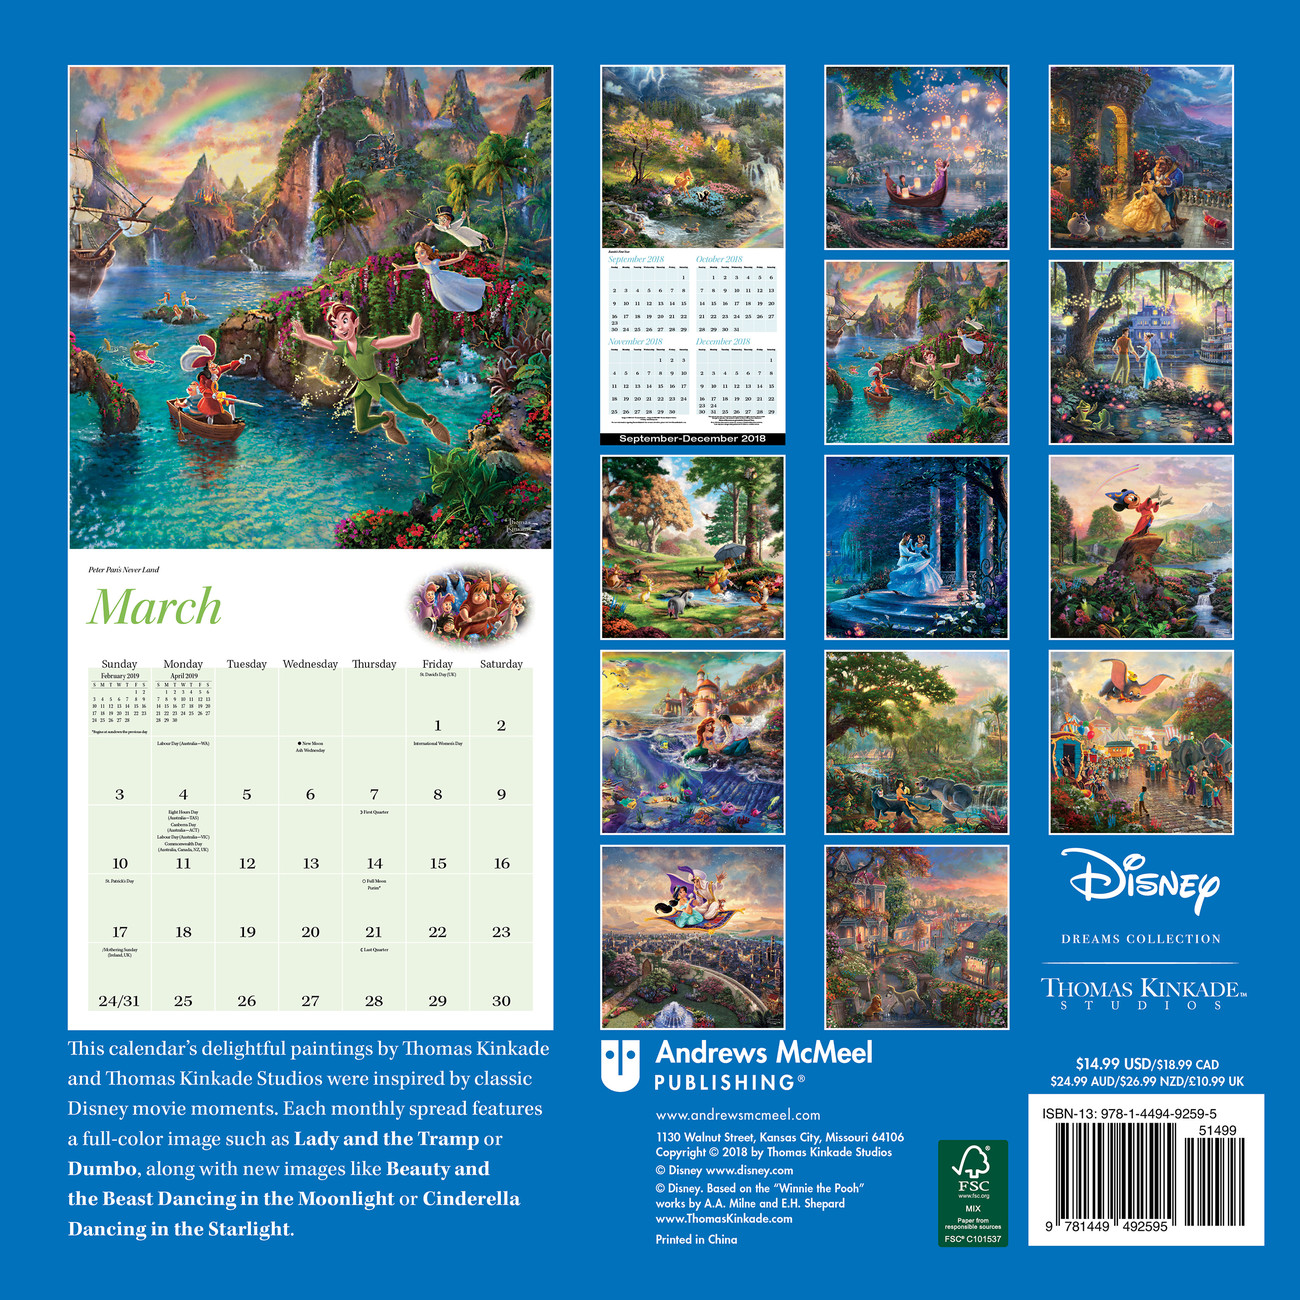 Thomas Kinkade The Disney Dreams Collection Calendars 2021 on